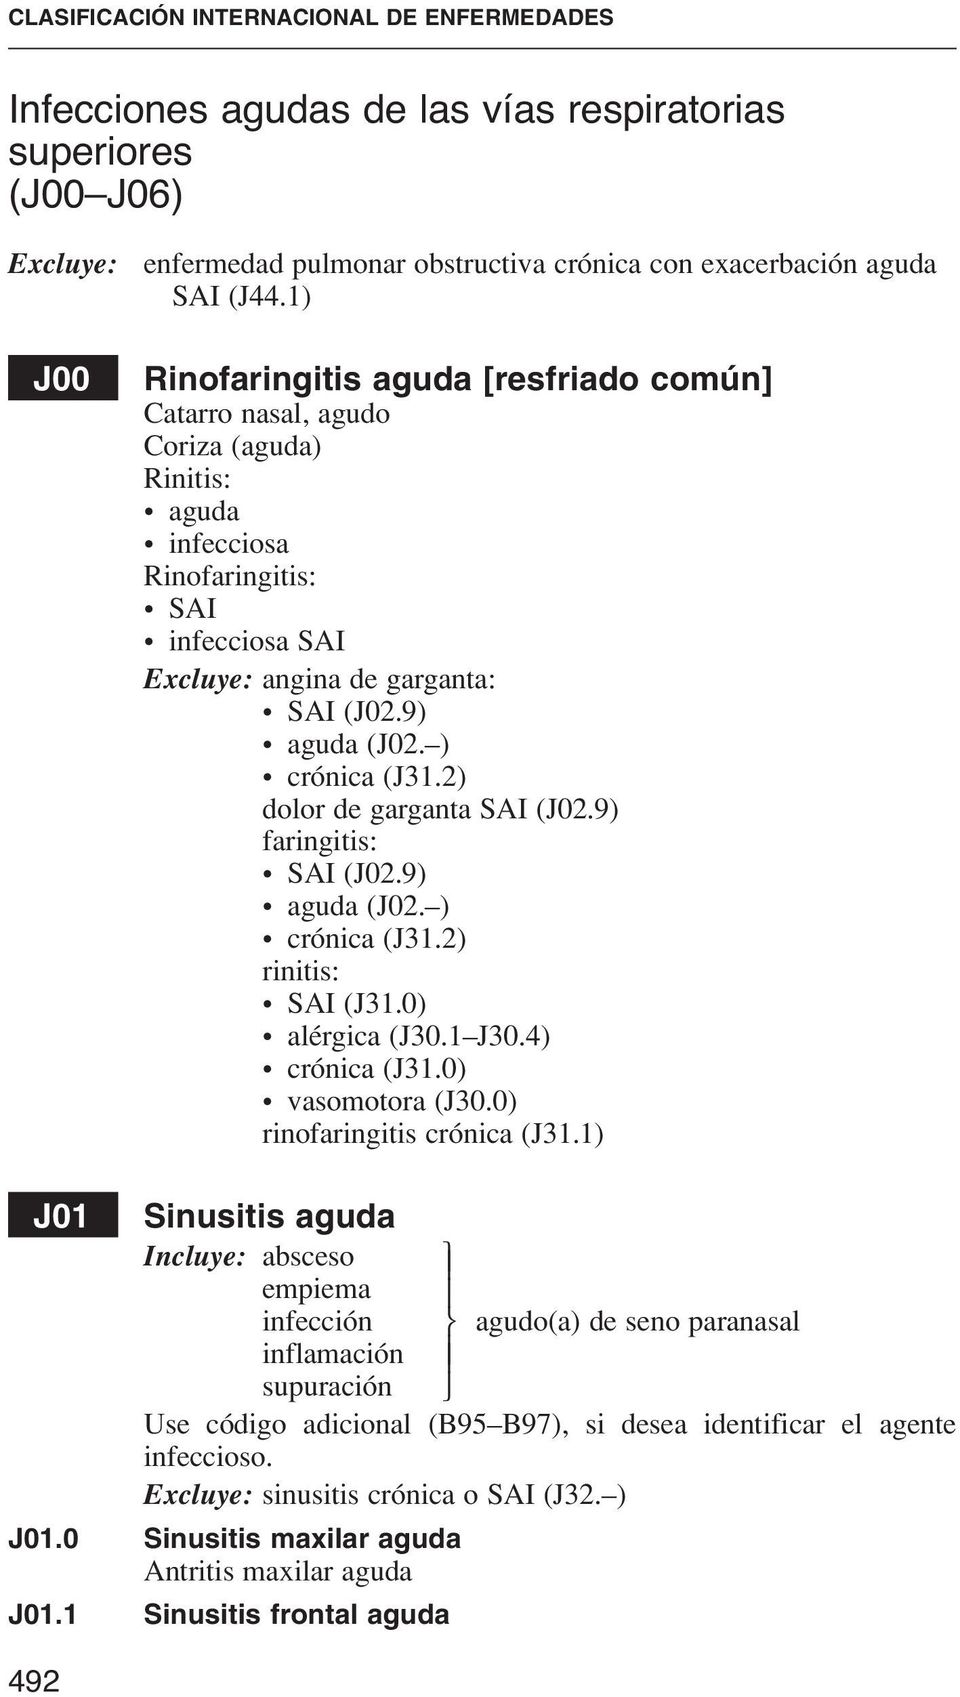 ) crónica (J31.2) dolor de garganta SAI (J02.9) faringitis: SAI (J02.9) aguda (J02. ) crónica (J31.2) rinitis: SAI (J31.0) alérgica (J30.1 J30.4) crónica (J31.0) vasomotora (J30.